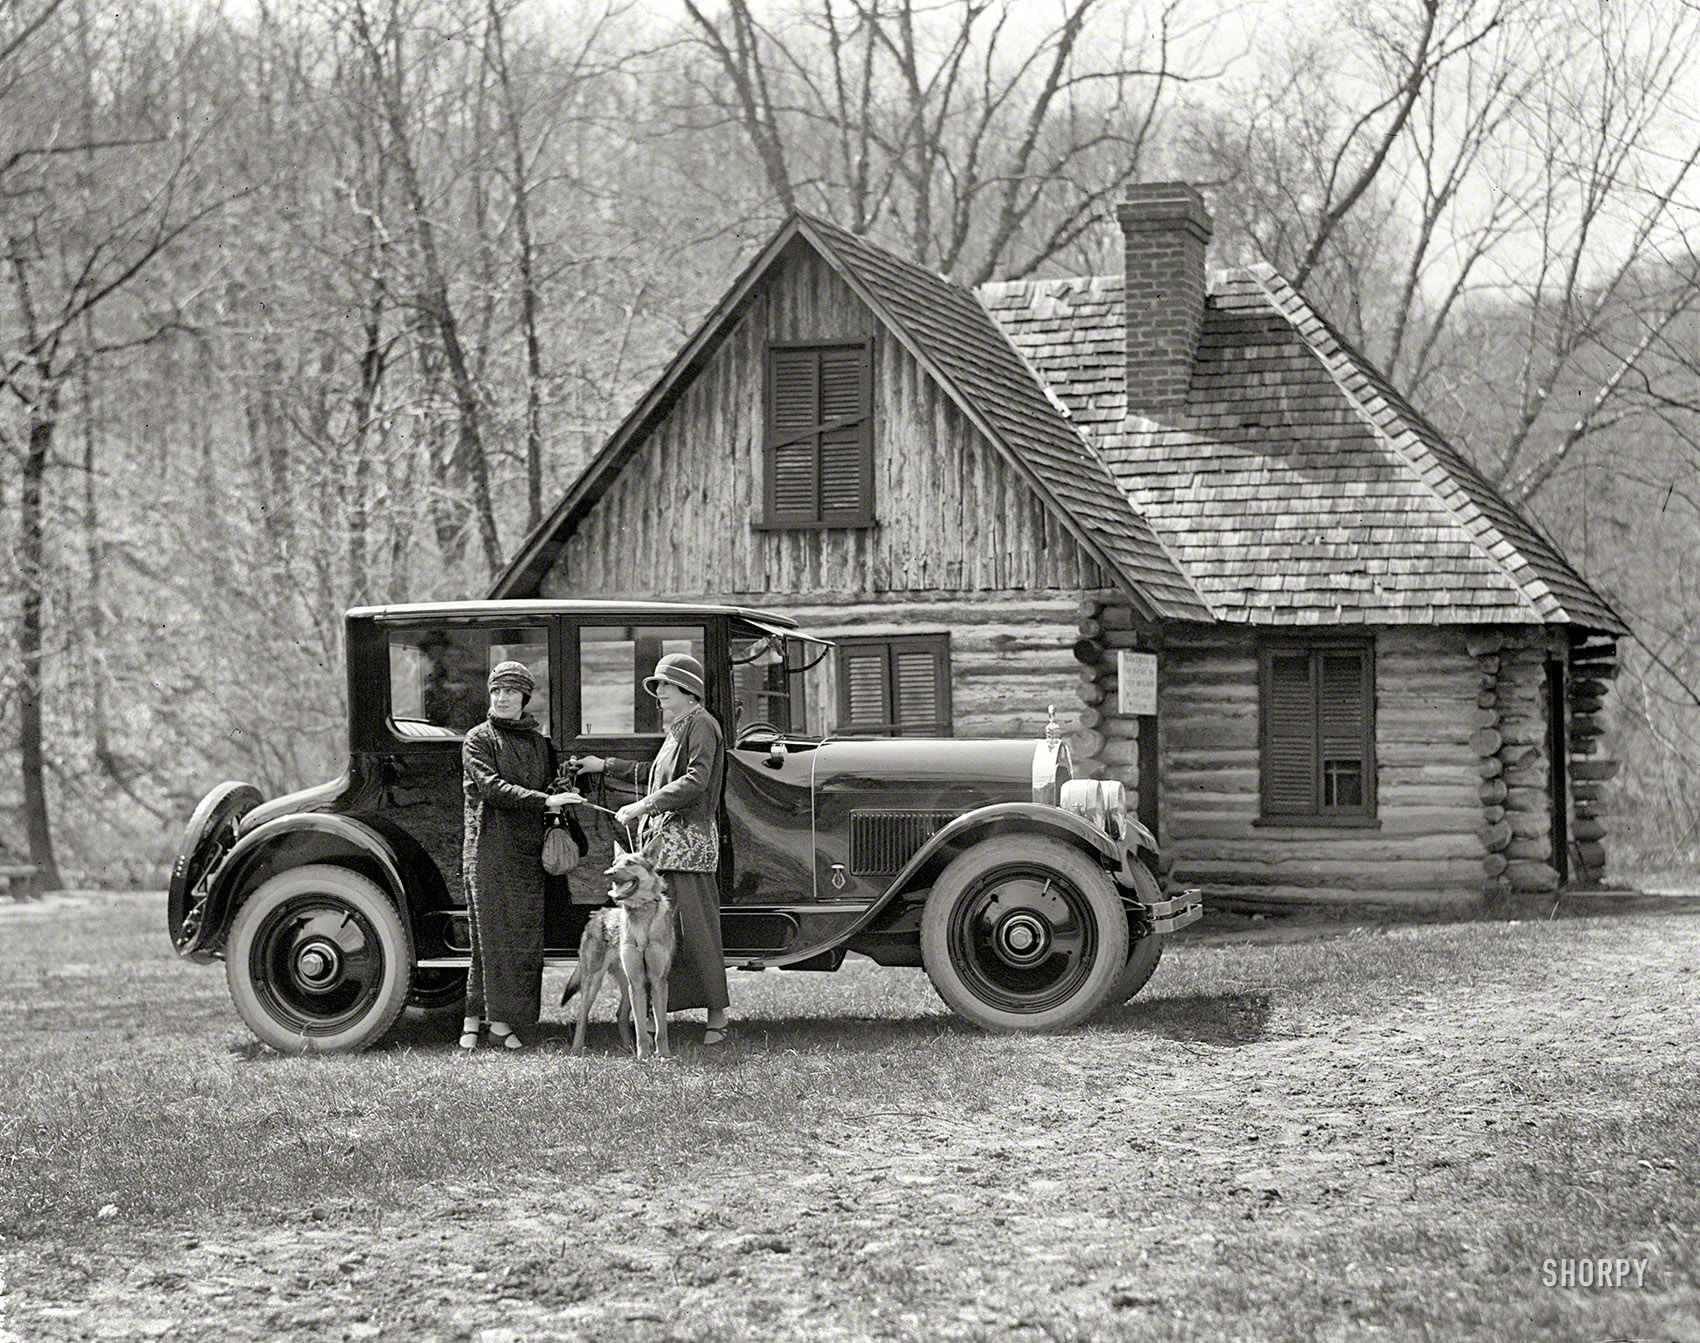 Washington, D.C., 1924. "Washington Hunt motor car." The building is the Joaquin Miller cabin at Rock Creek Park. National Photo Co. View full size.